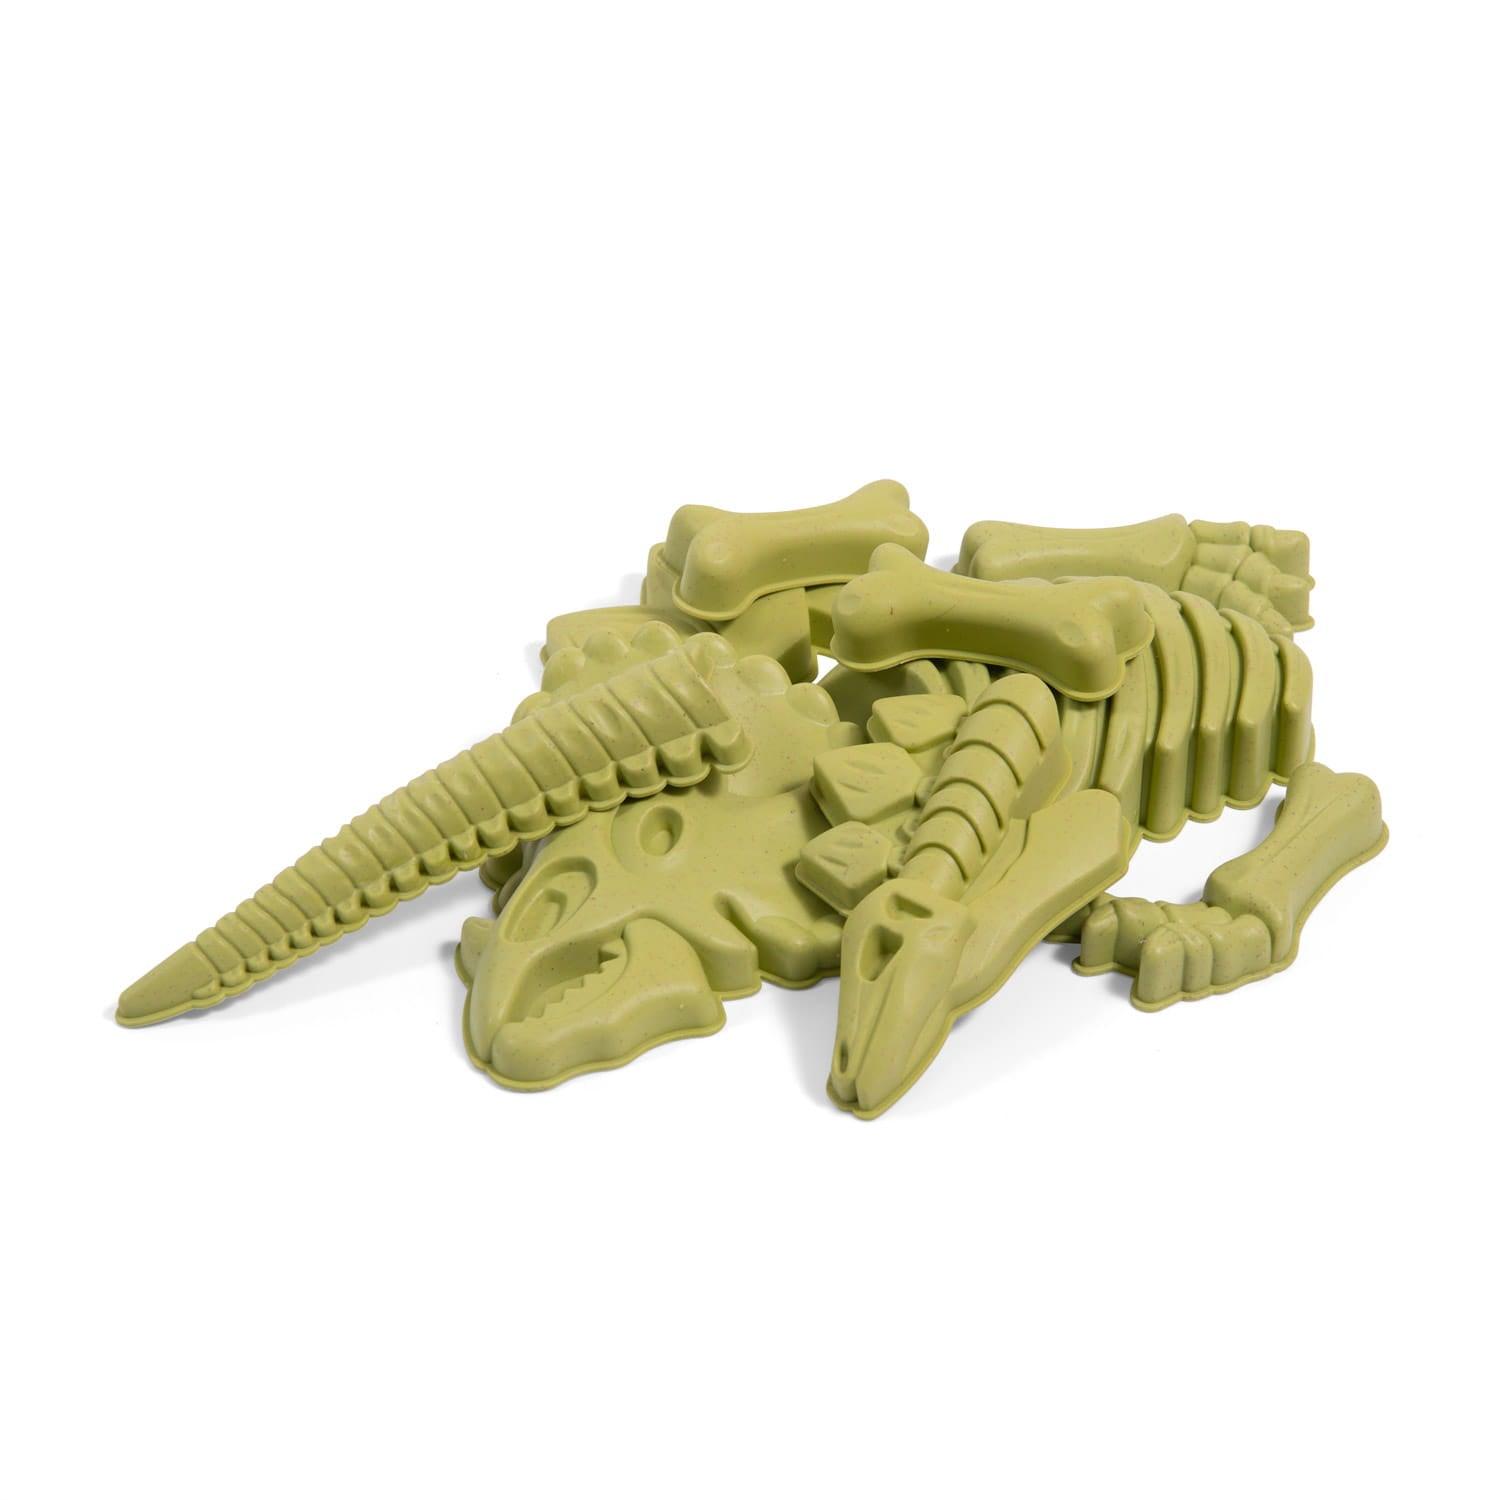 Moulin Roty: Dinosaur Skeleton sand molds